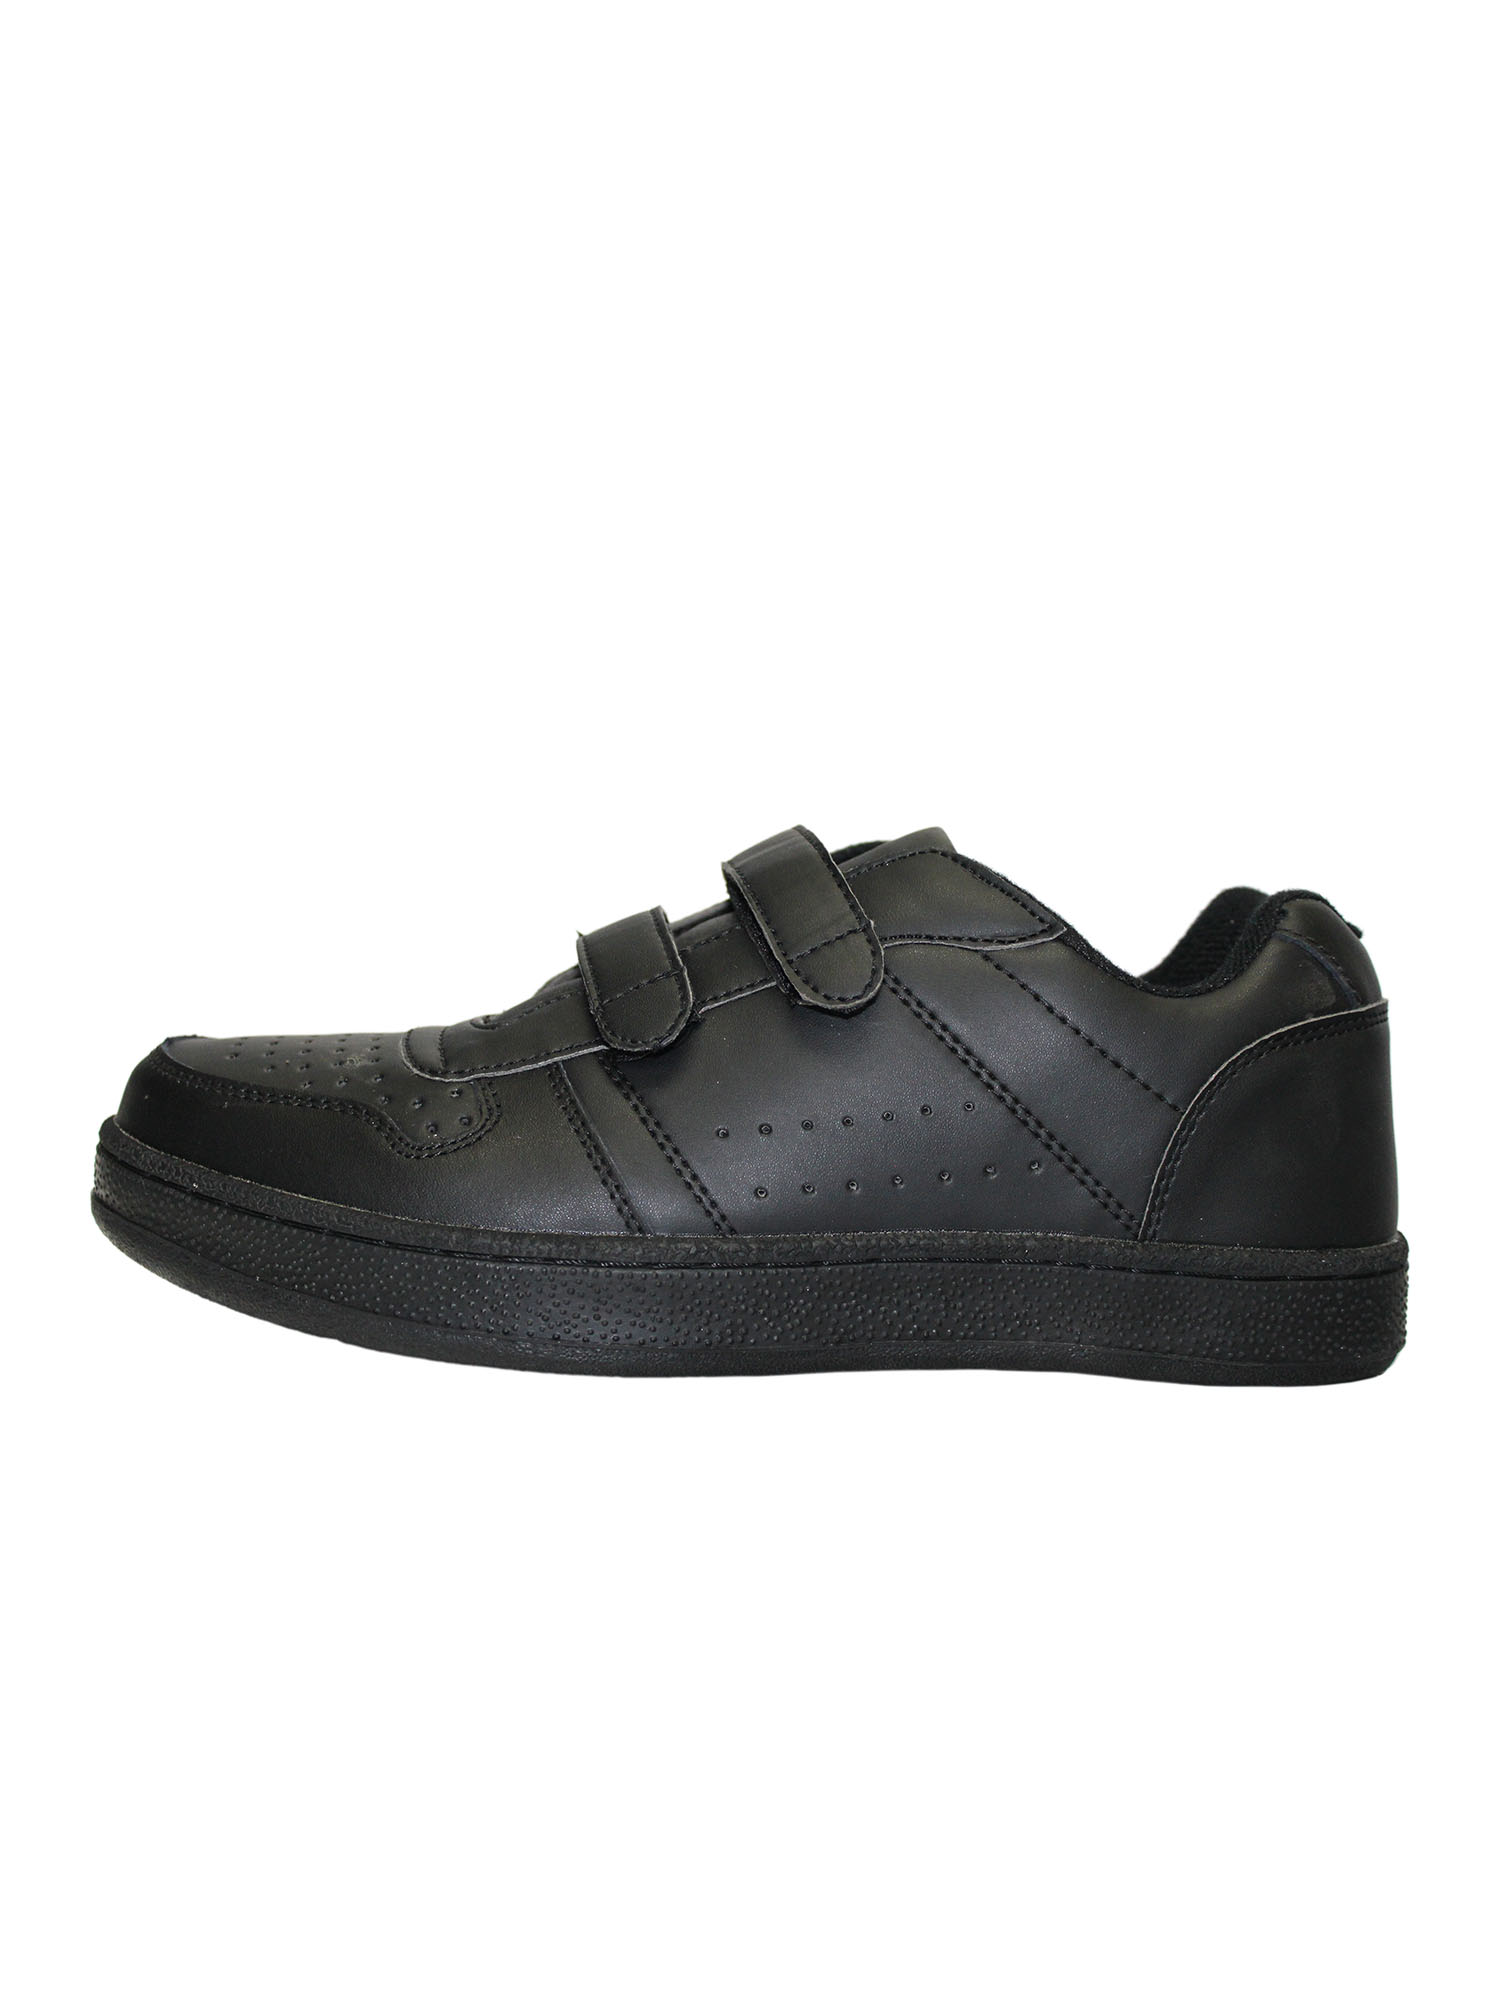 Tanleewa Men's Leather Strap Sneakers Lightweight Hook and Loop Walking Shoe Size 6.5 Adult Male - image 2 of 4